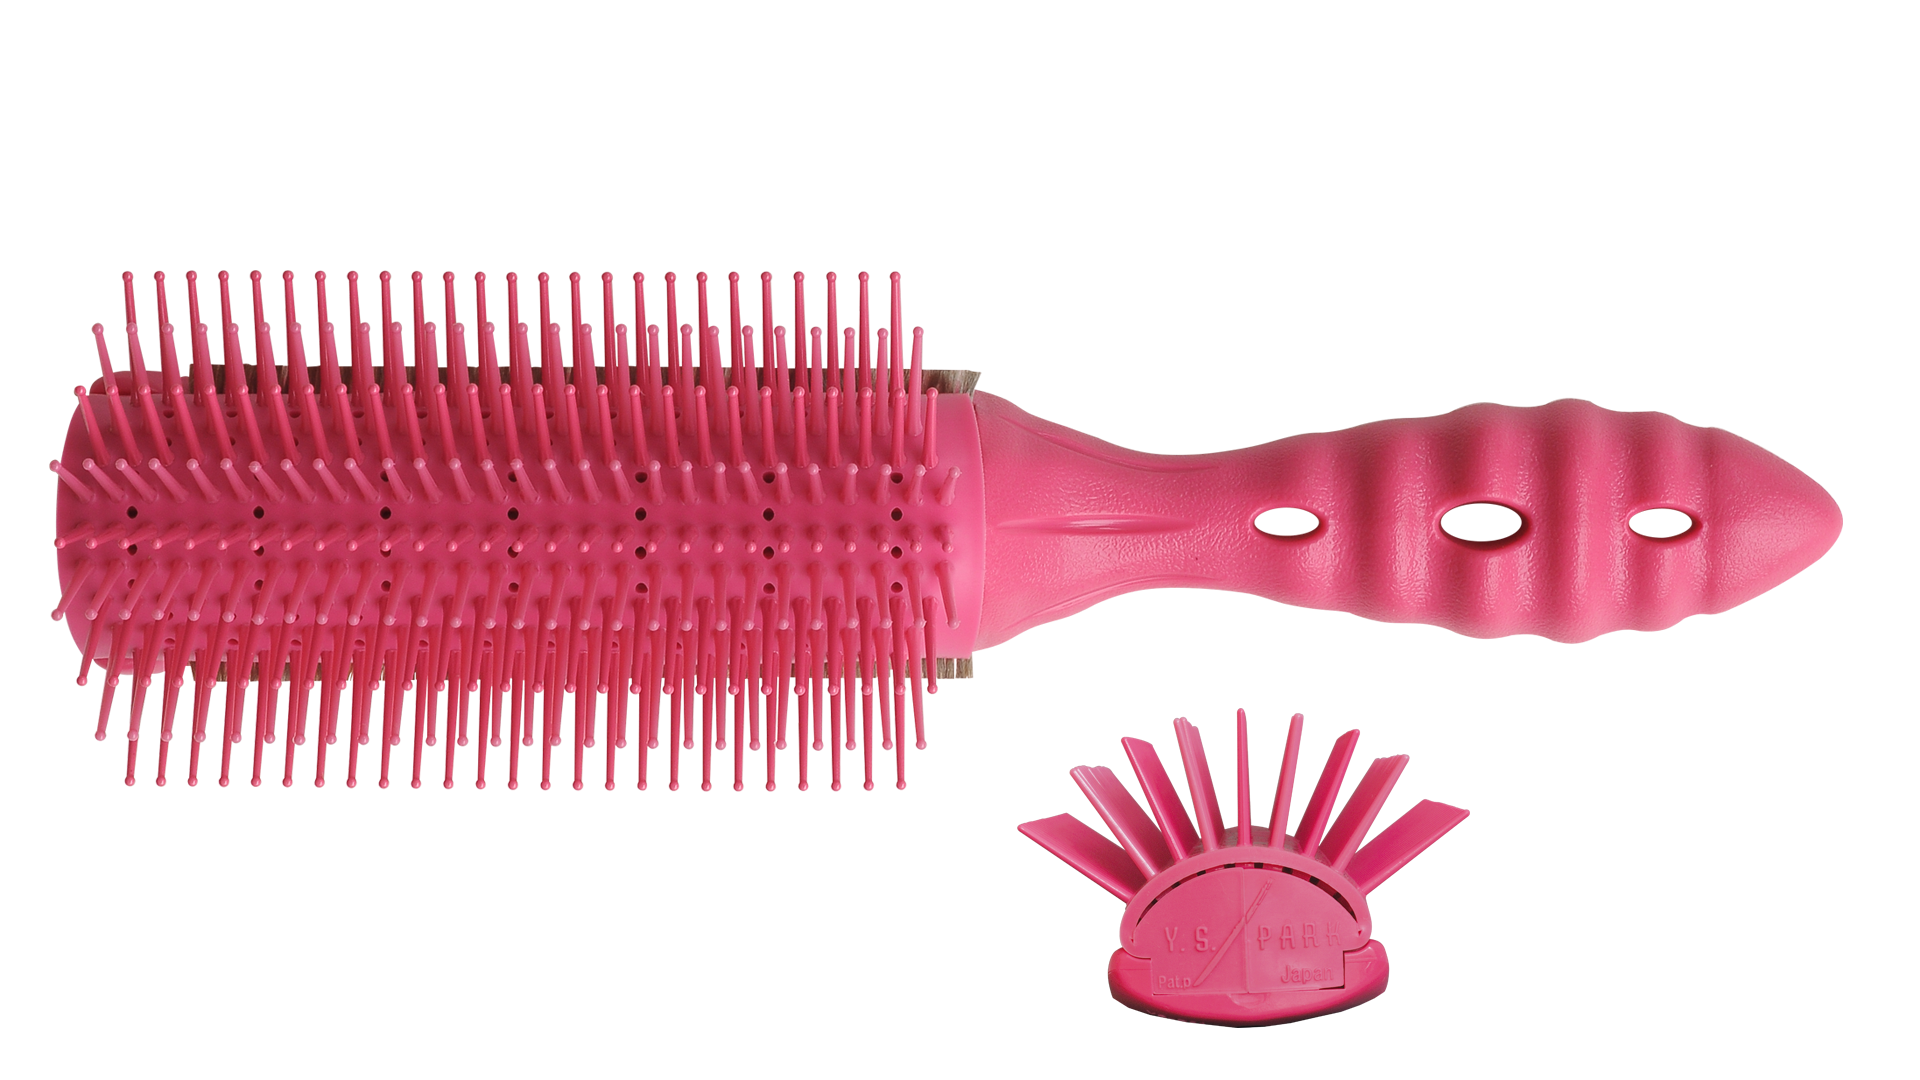 Y.S. Park Dragon Air brush (pink)